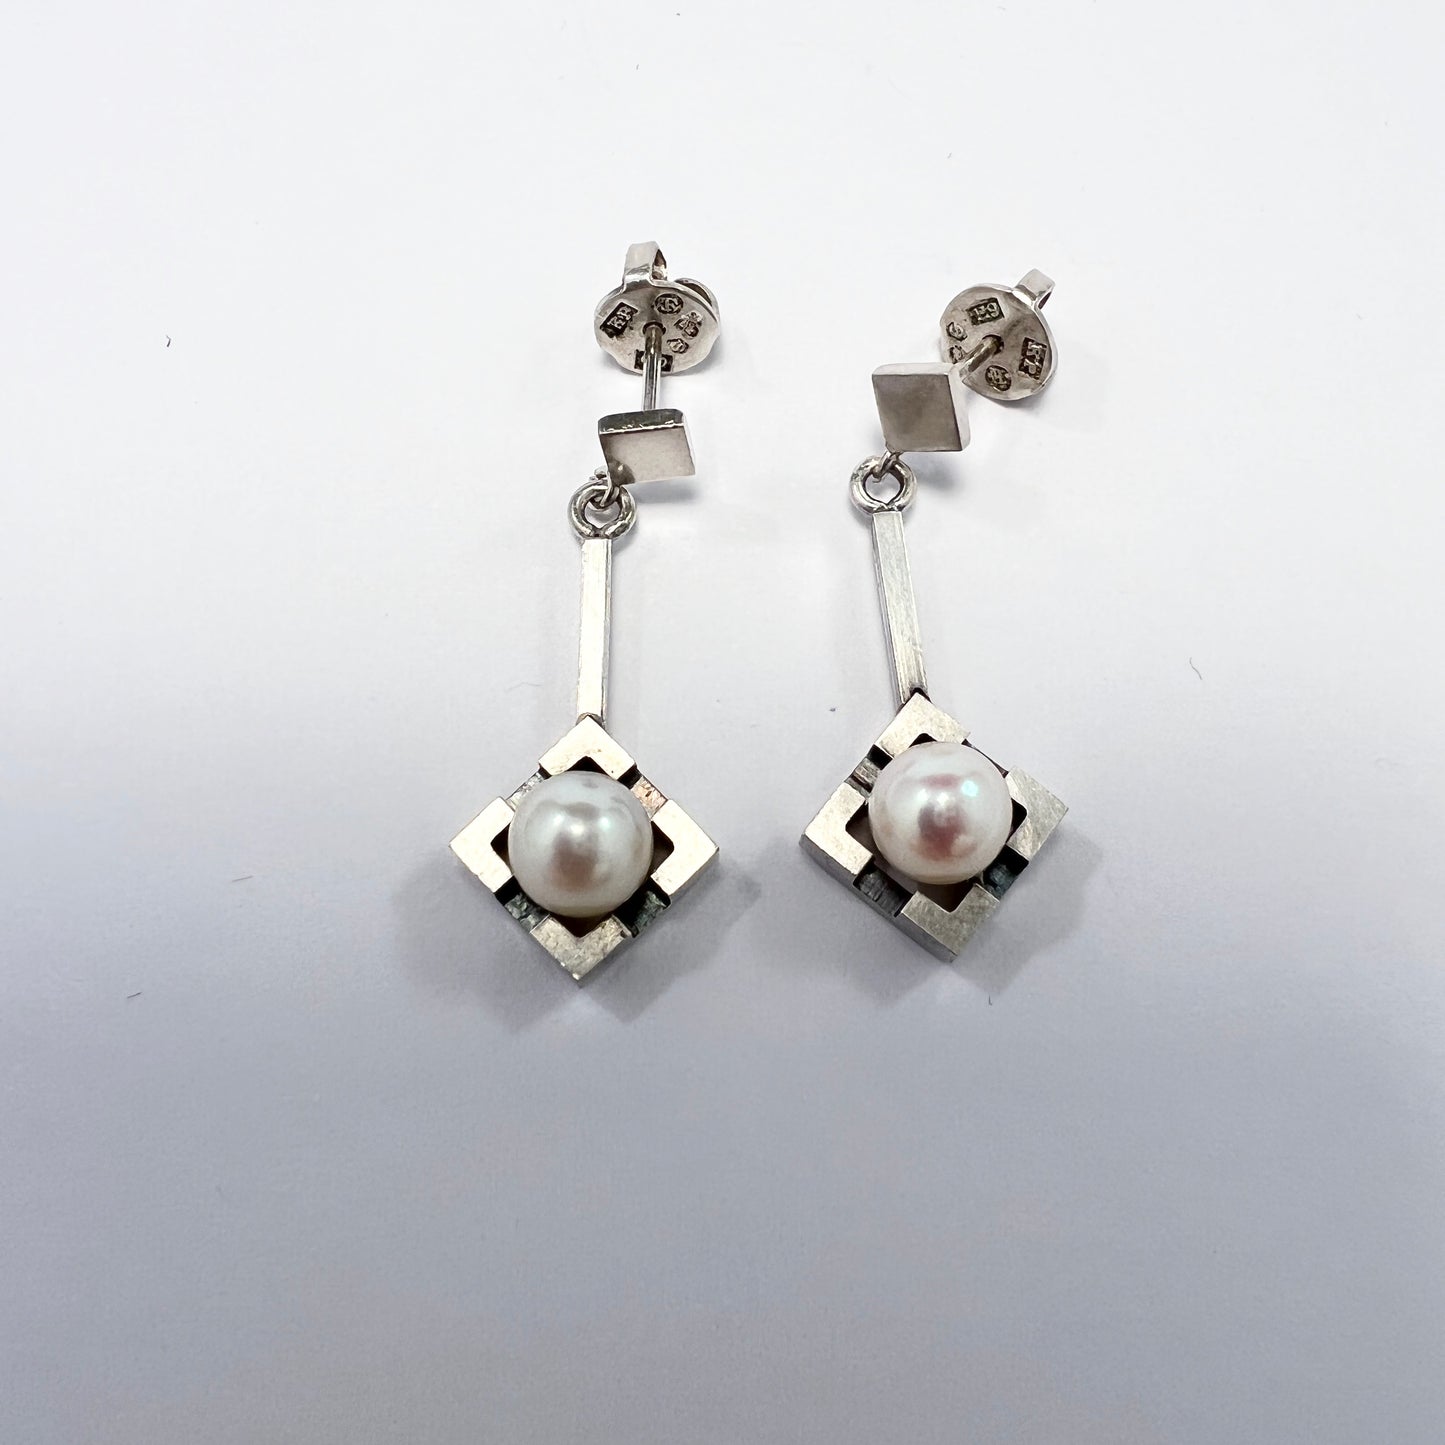 Alton, Sweden 1965-66. Vintage Sterling Silver Cultured Pearl Earrings.